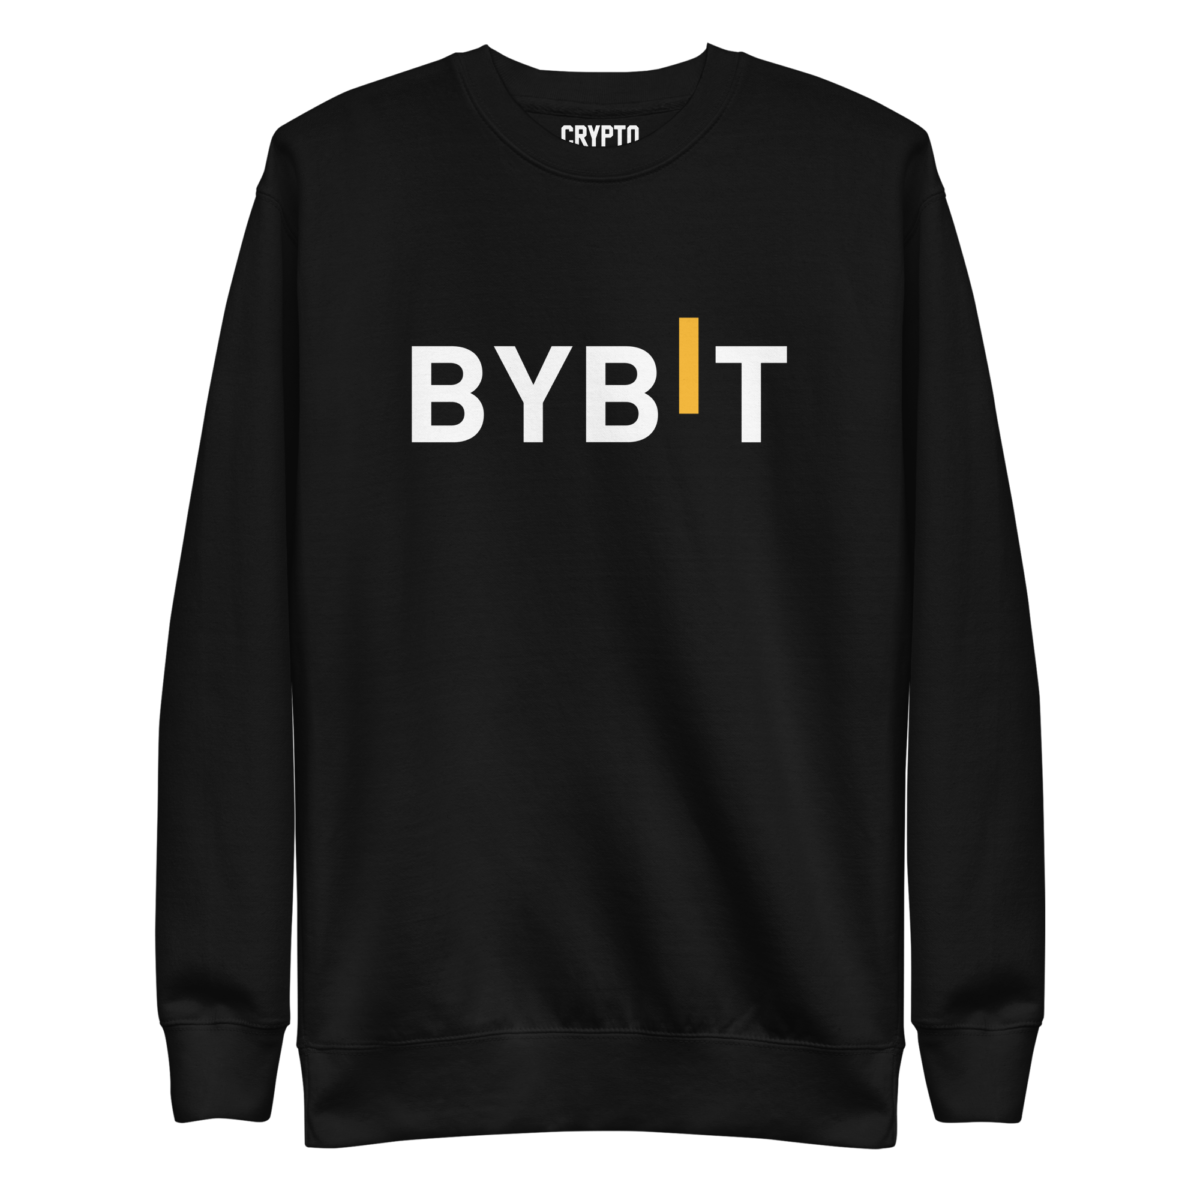 unisex premium sweatshirt black front 6321d2b440b09 - Bybit Sweatshirt